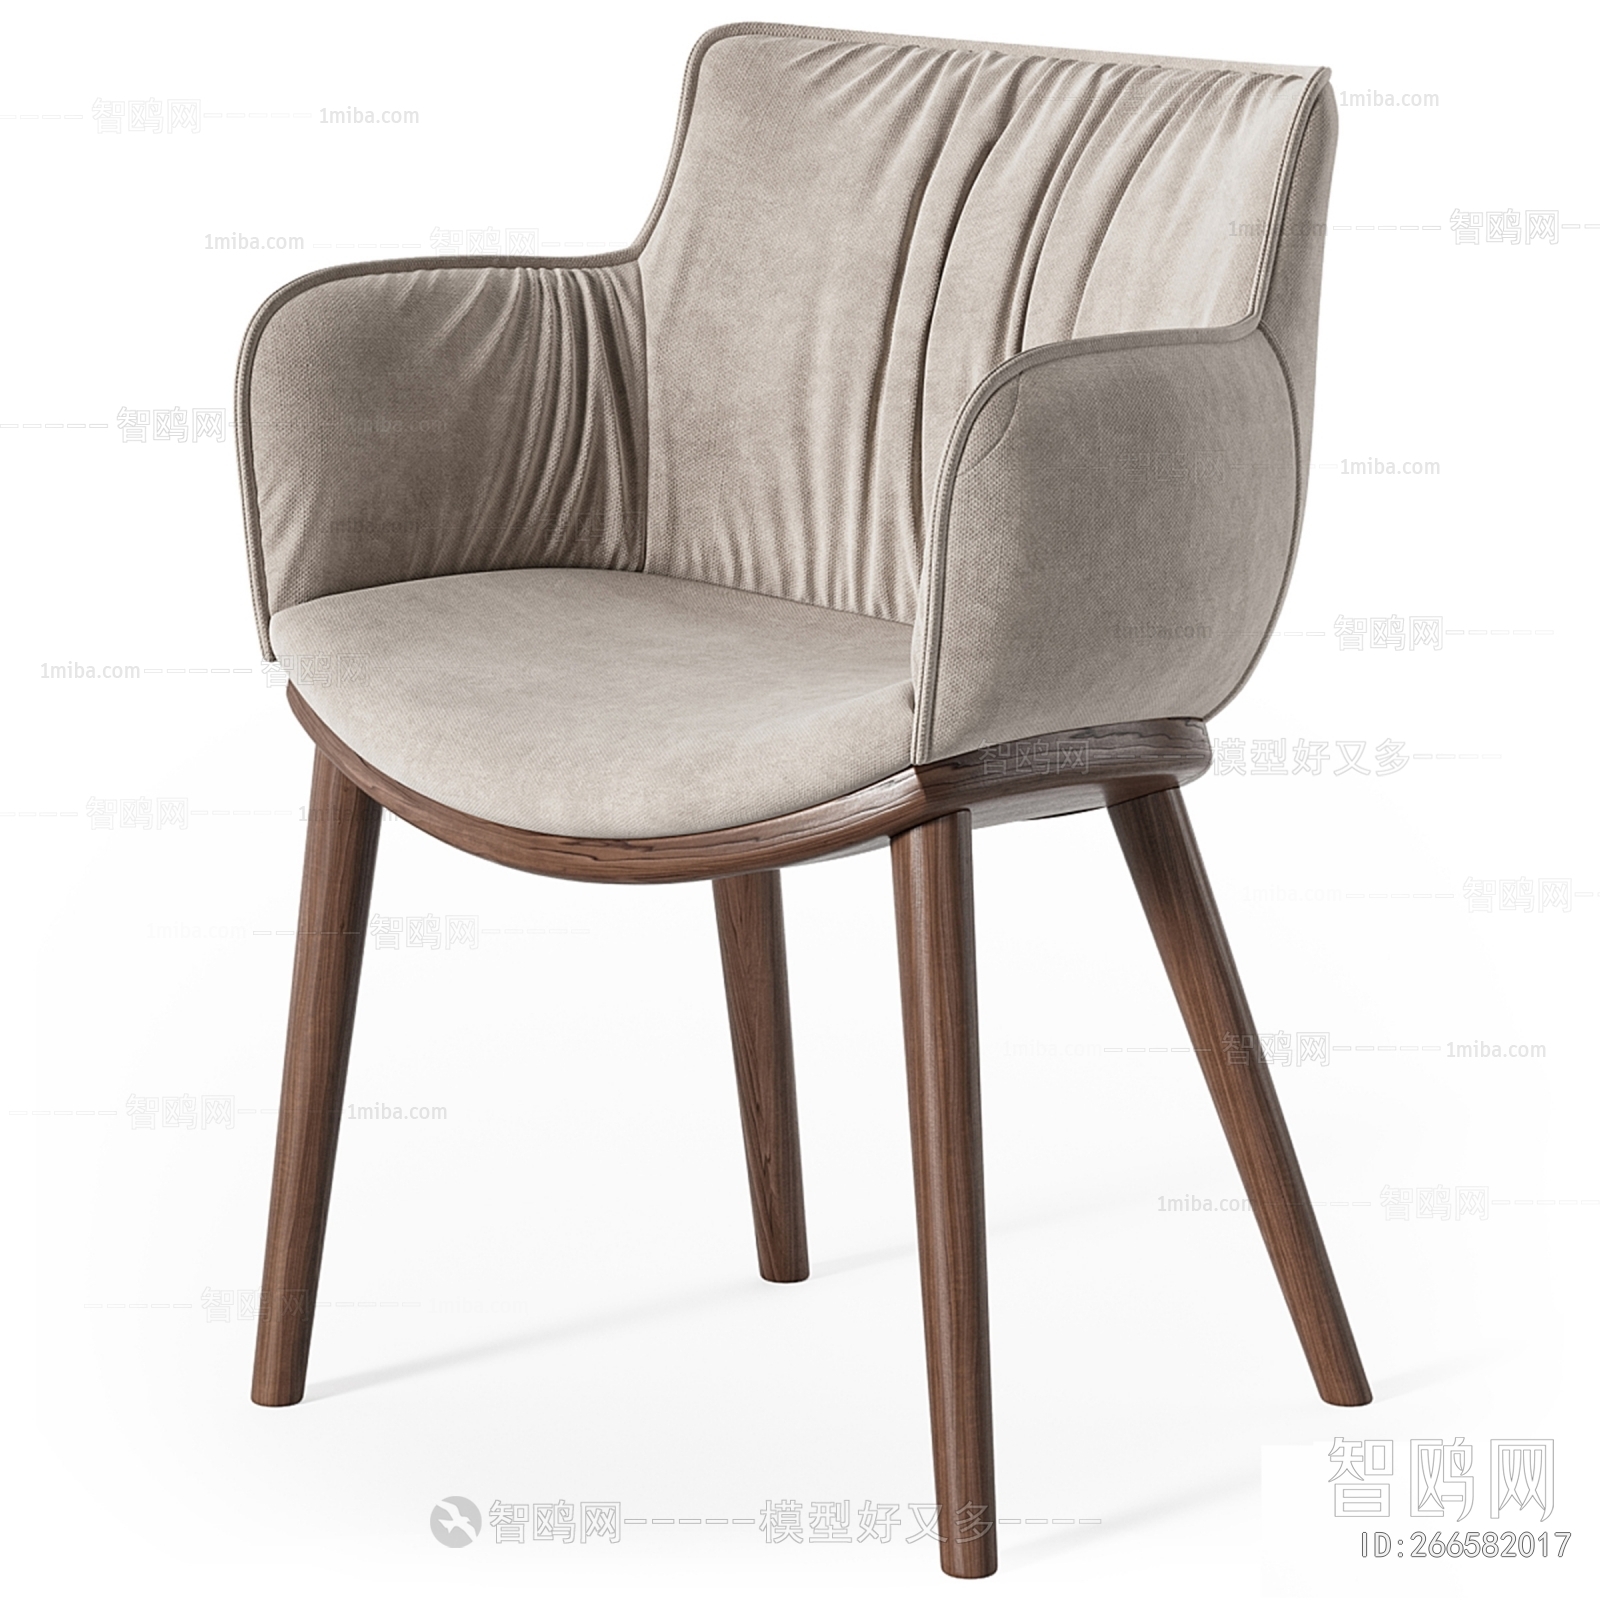 Modern Lounge Chair